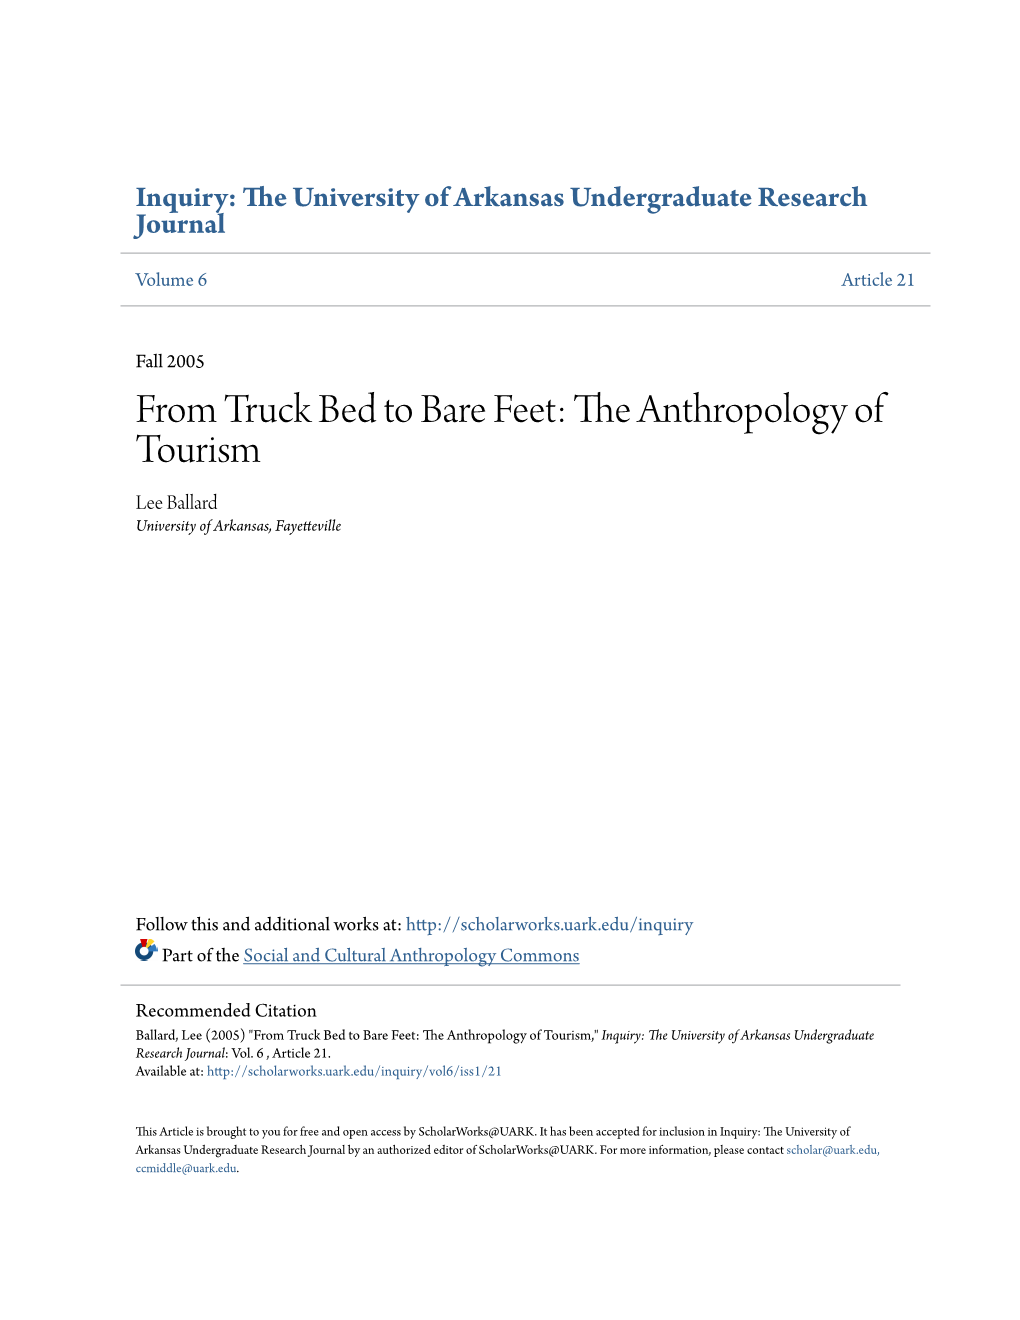 The Anthropology of Tourism Lee Ballard University of Arkansas, Fayetteville